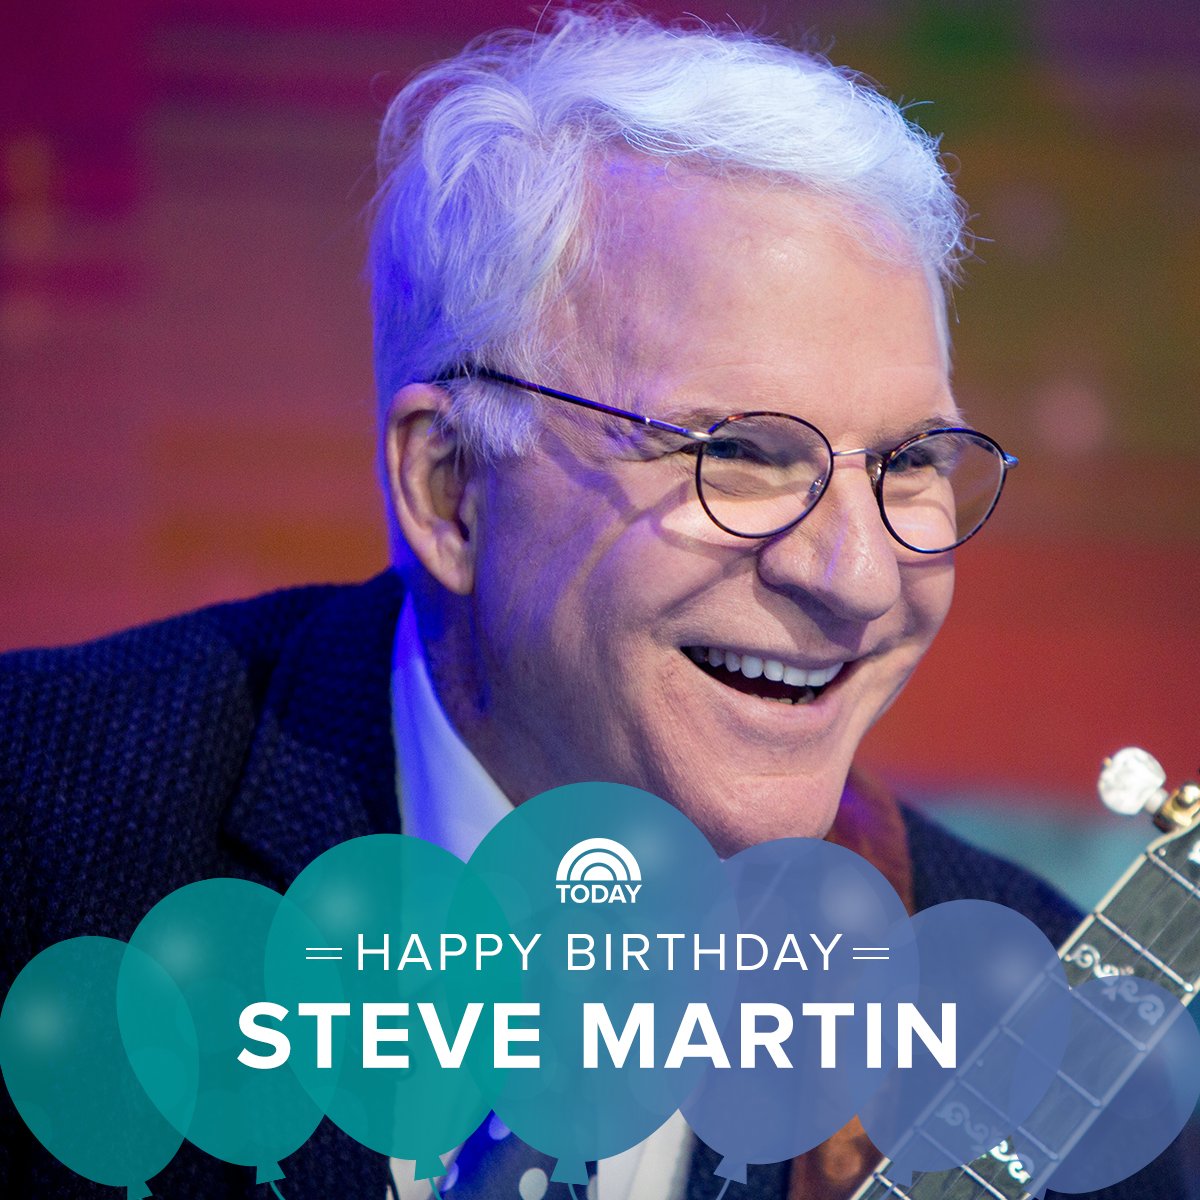 Happy birthday to the hilarious Steve Martin! 